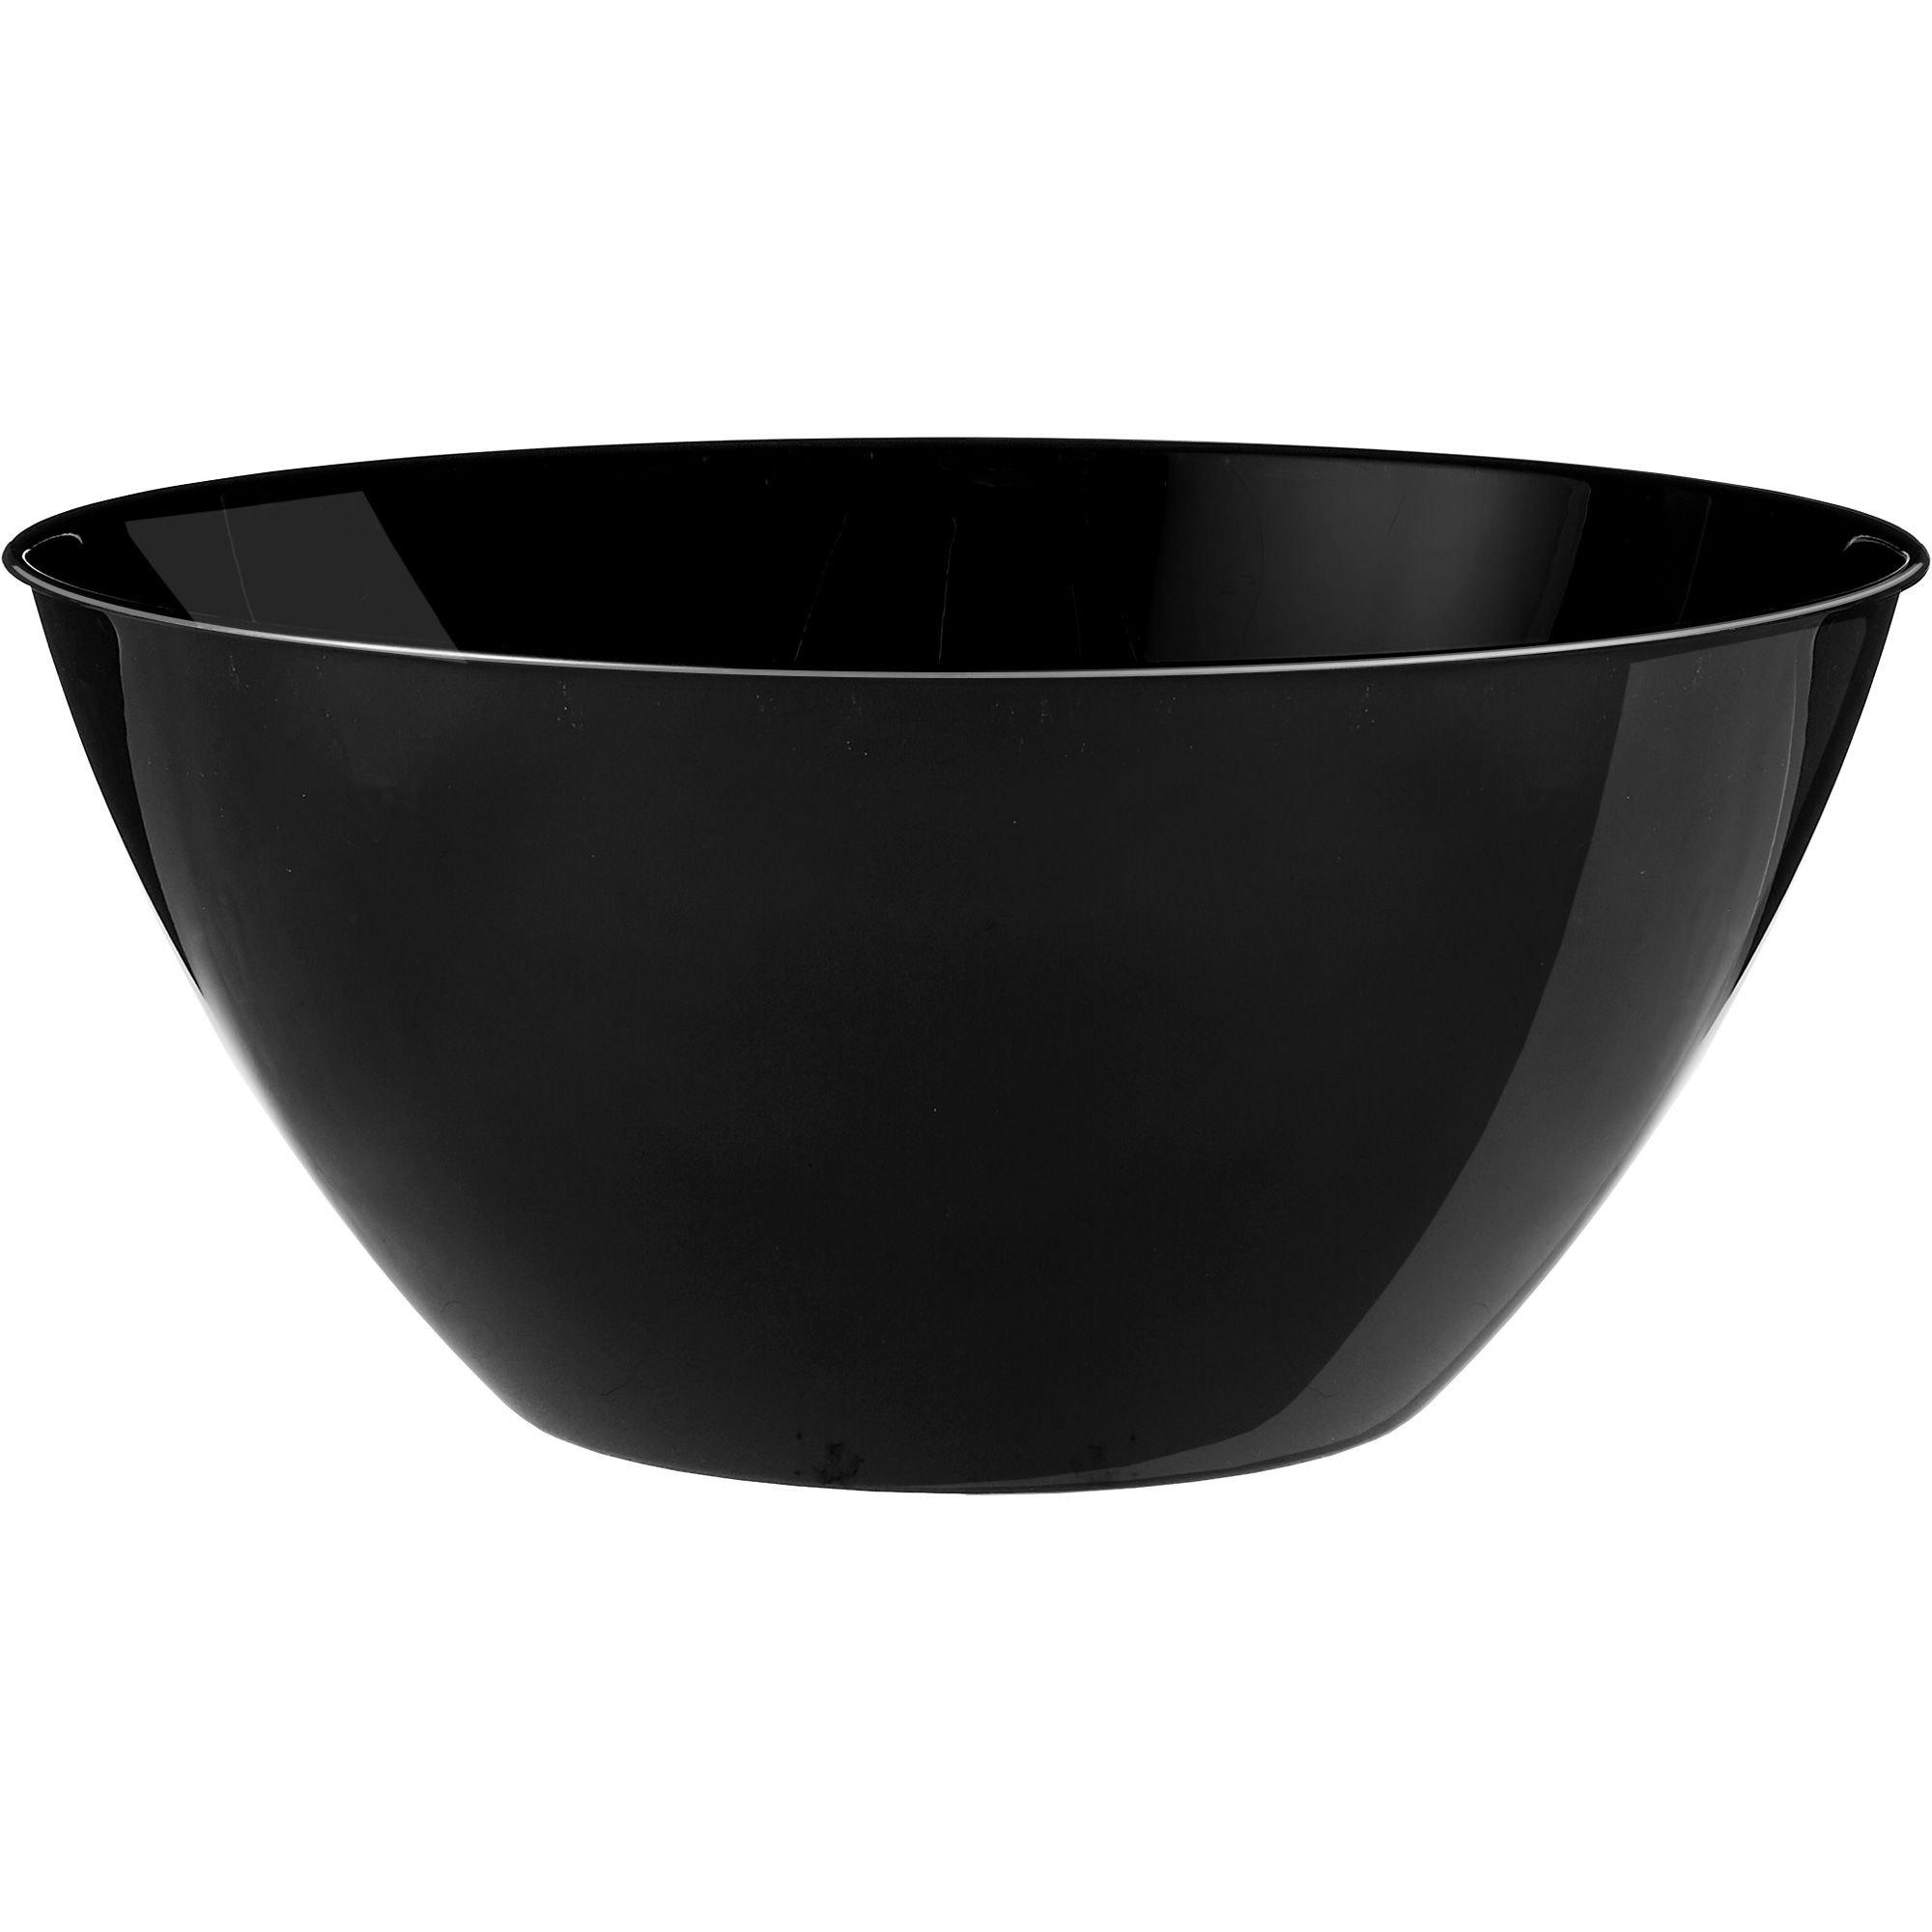 Black Catering Bowl 64oz - 150 pack (260805)